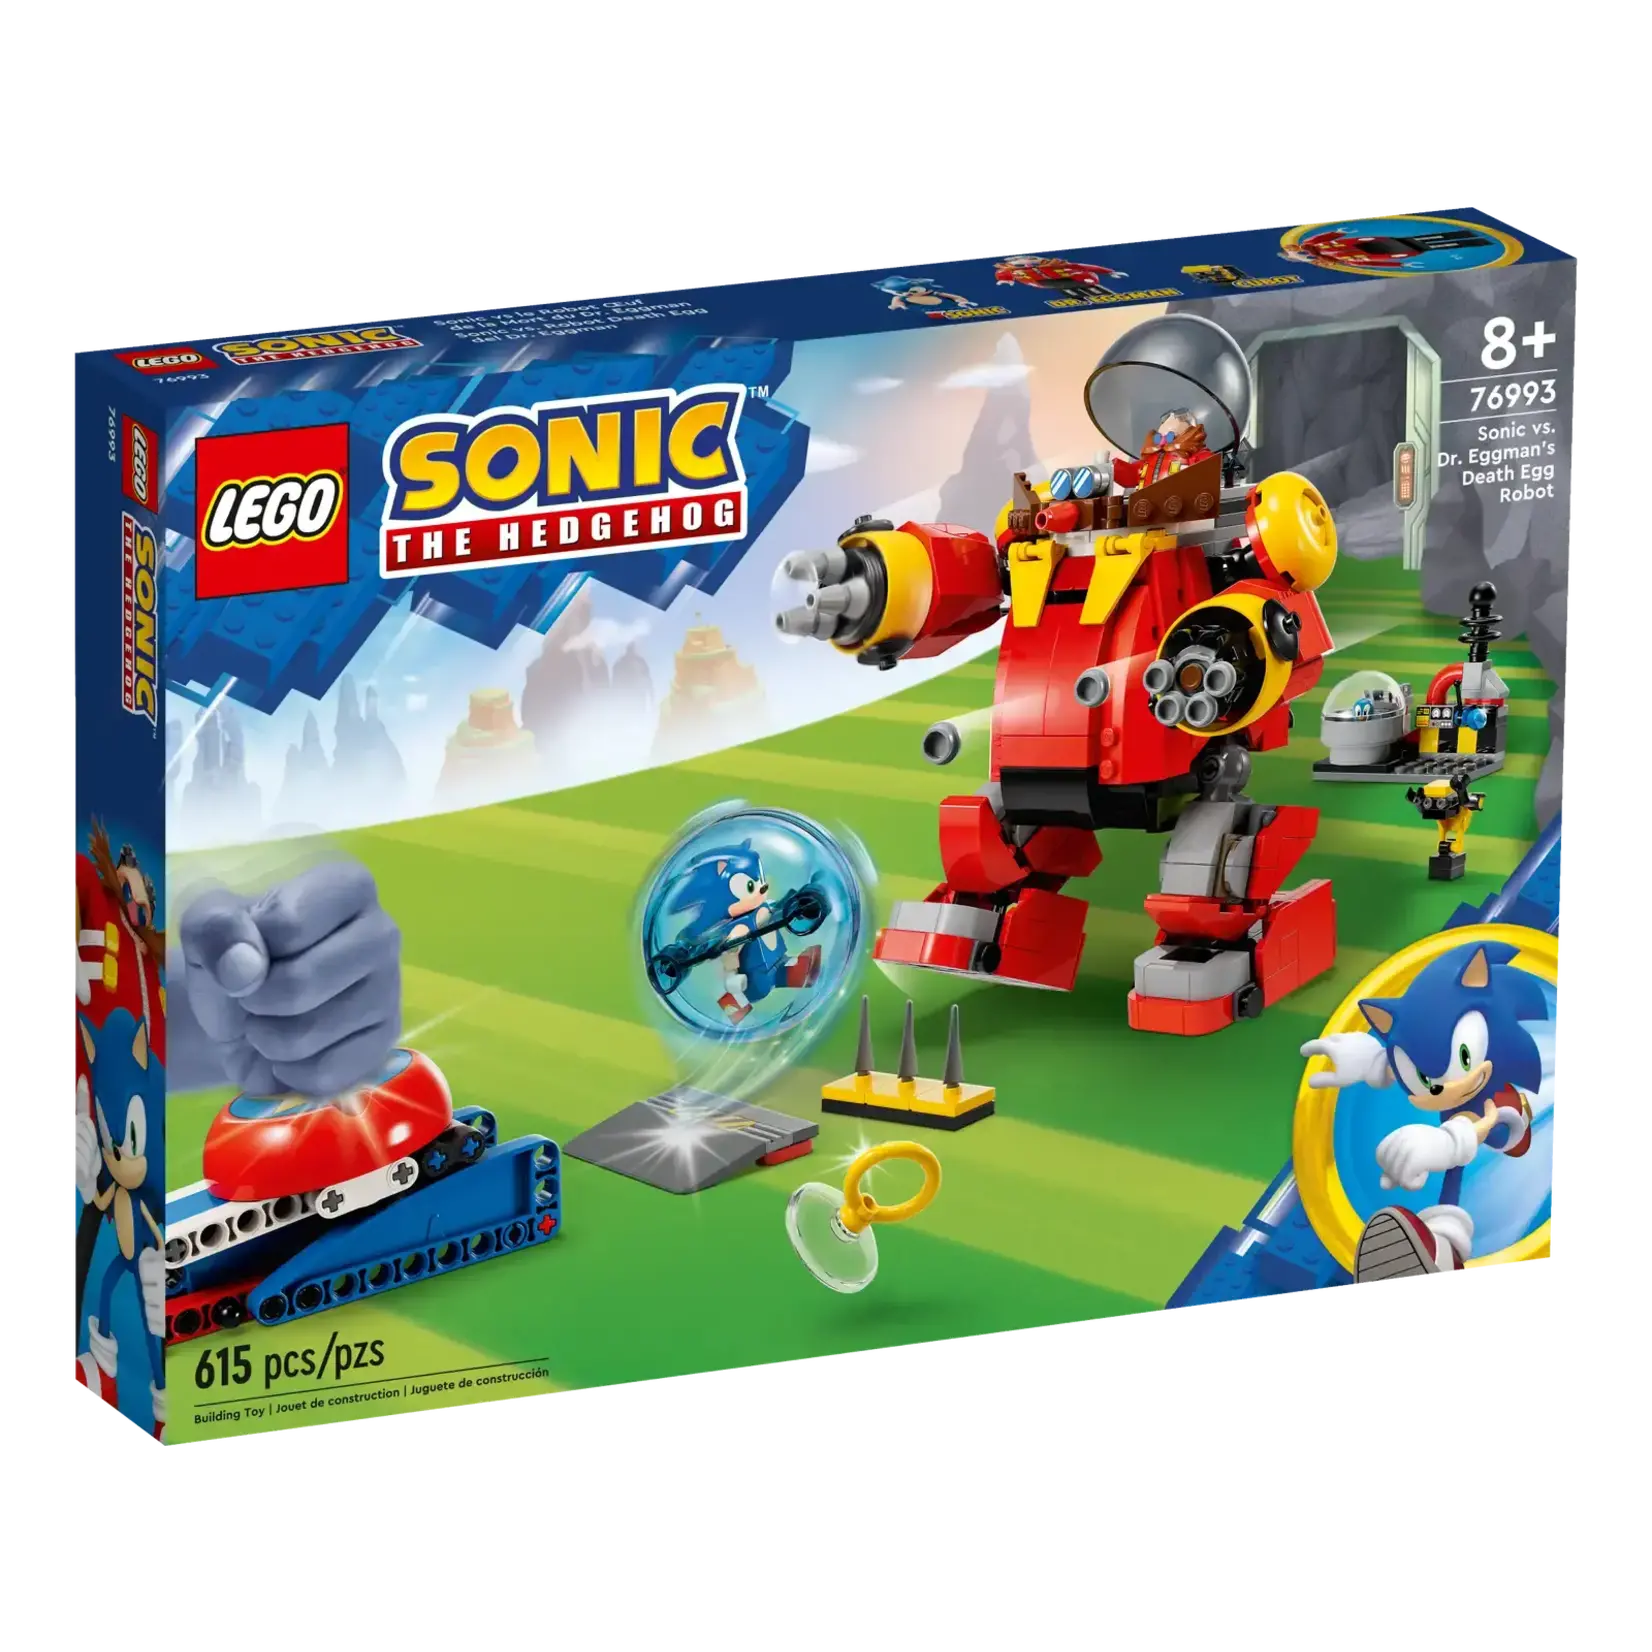 LEGO LEGO Sonic vs. Dr. Eggman's Death Egg Robot (76993)